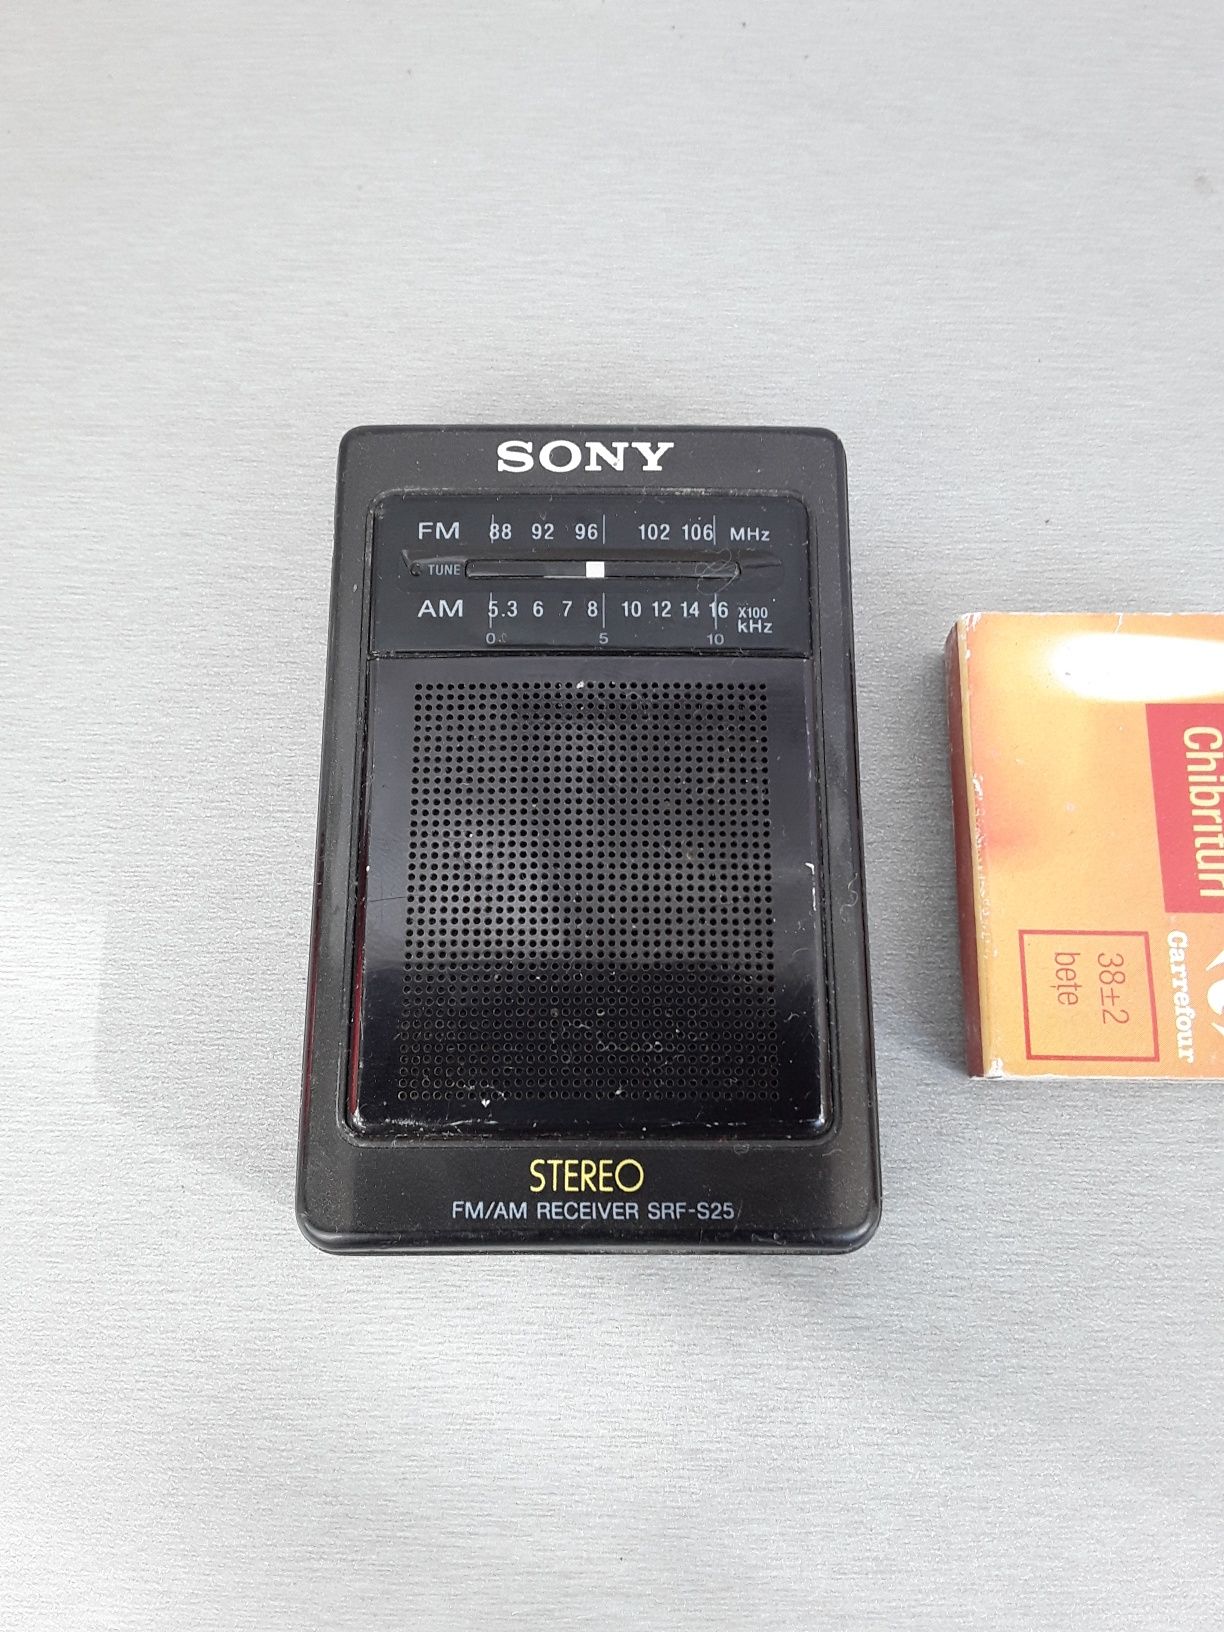 Radio Sony stereo vintage